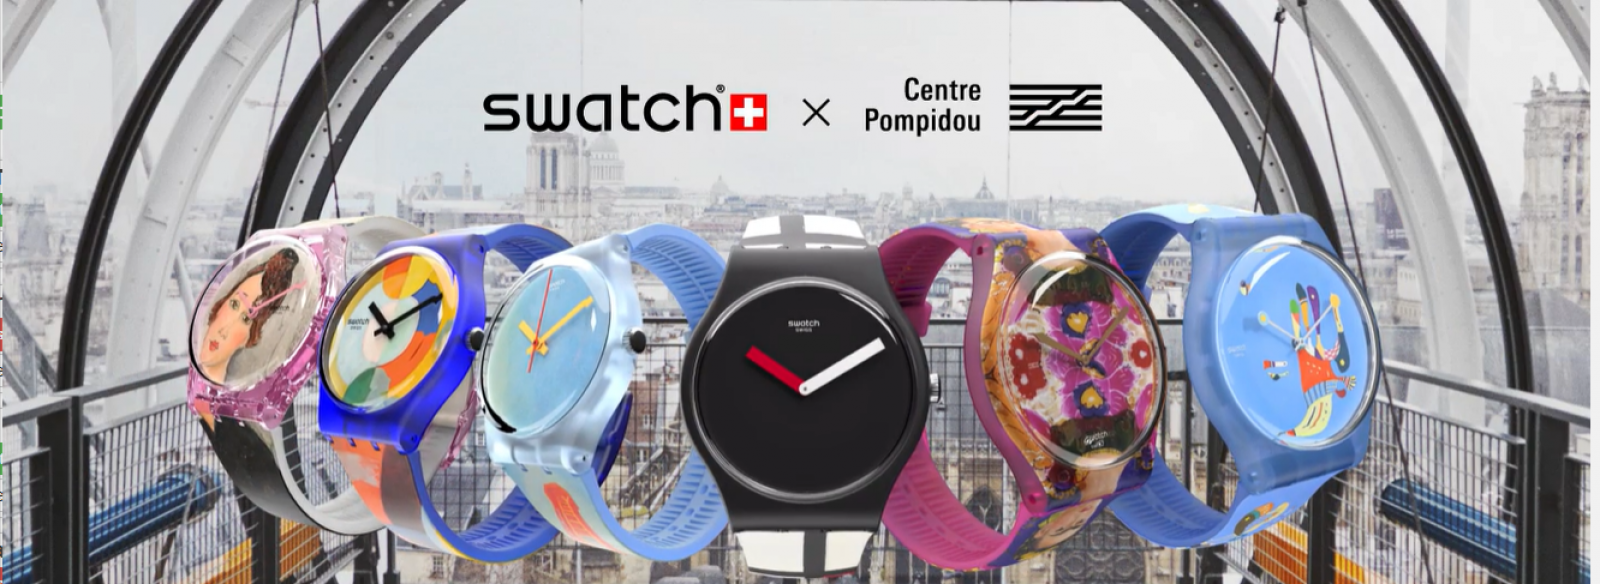 SWATCH x Centre Pompidou